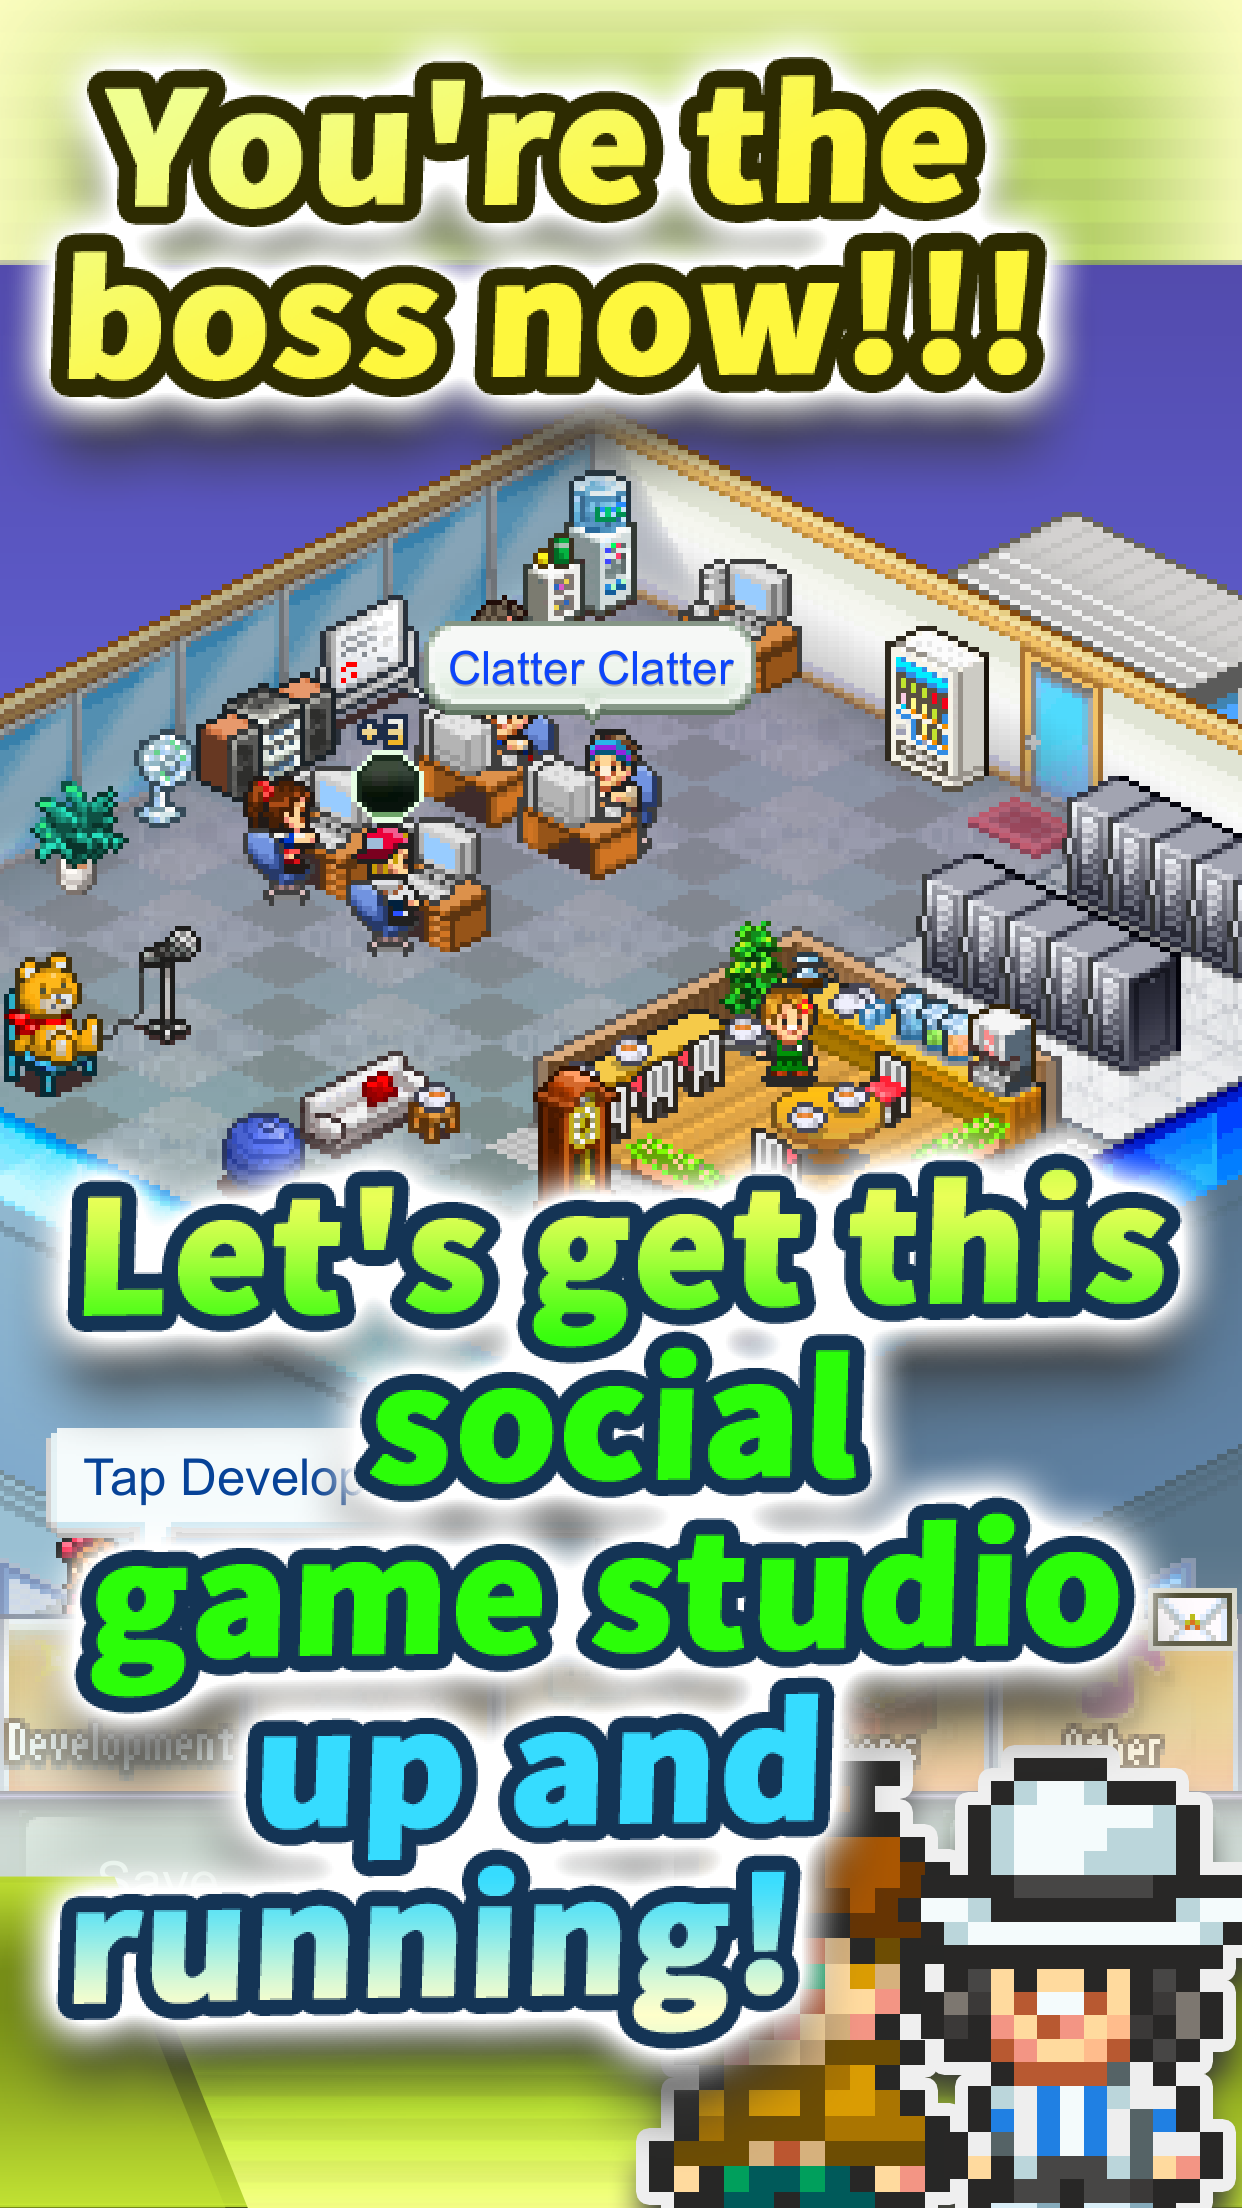 Screenshot of Social Dev Story